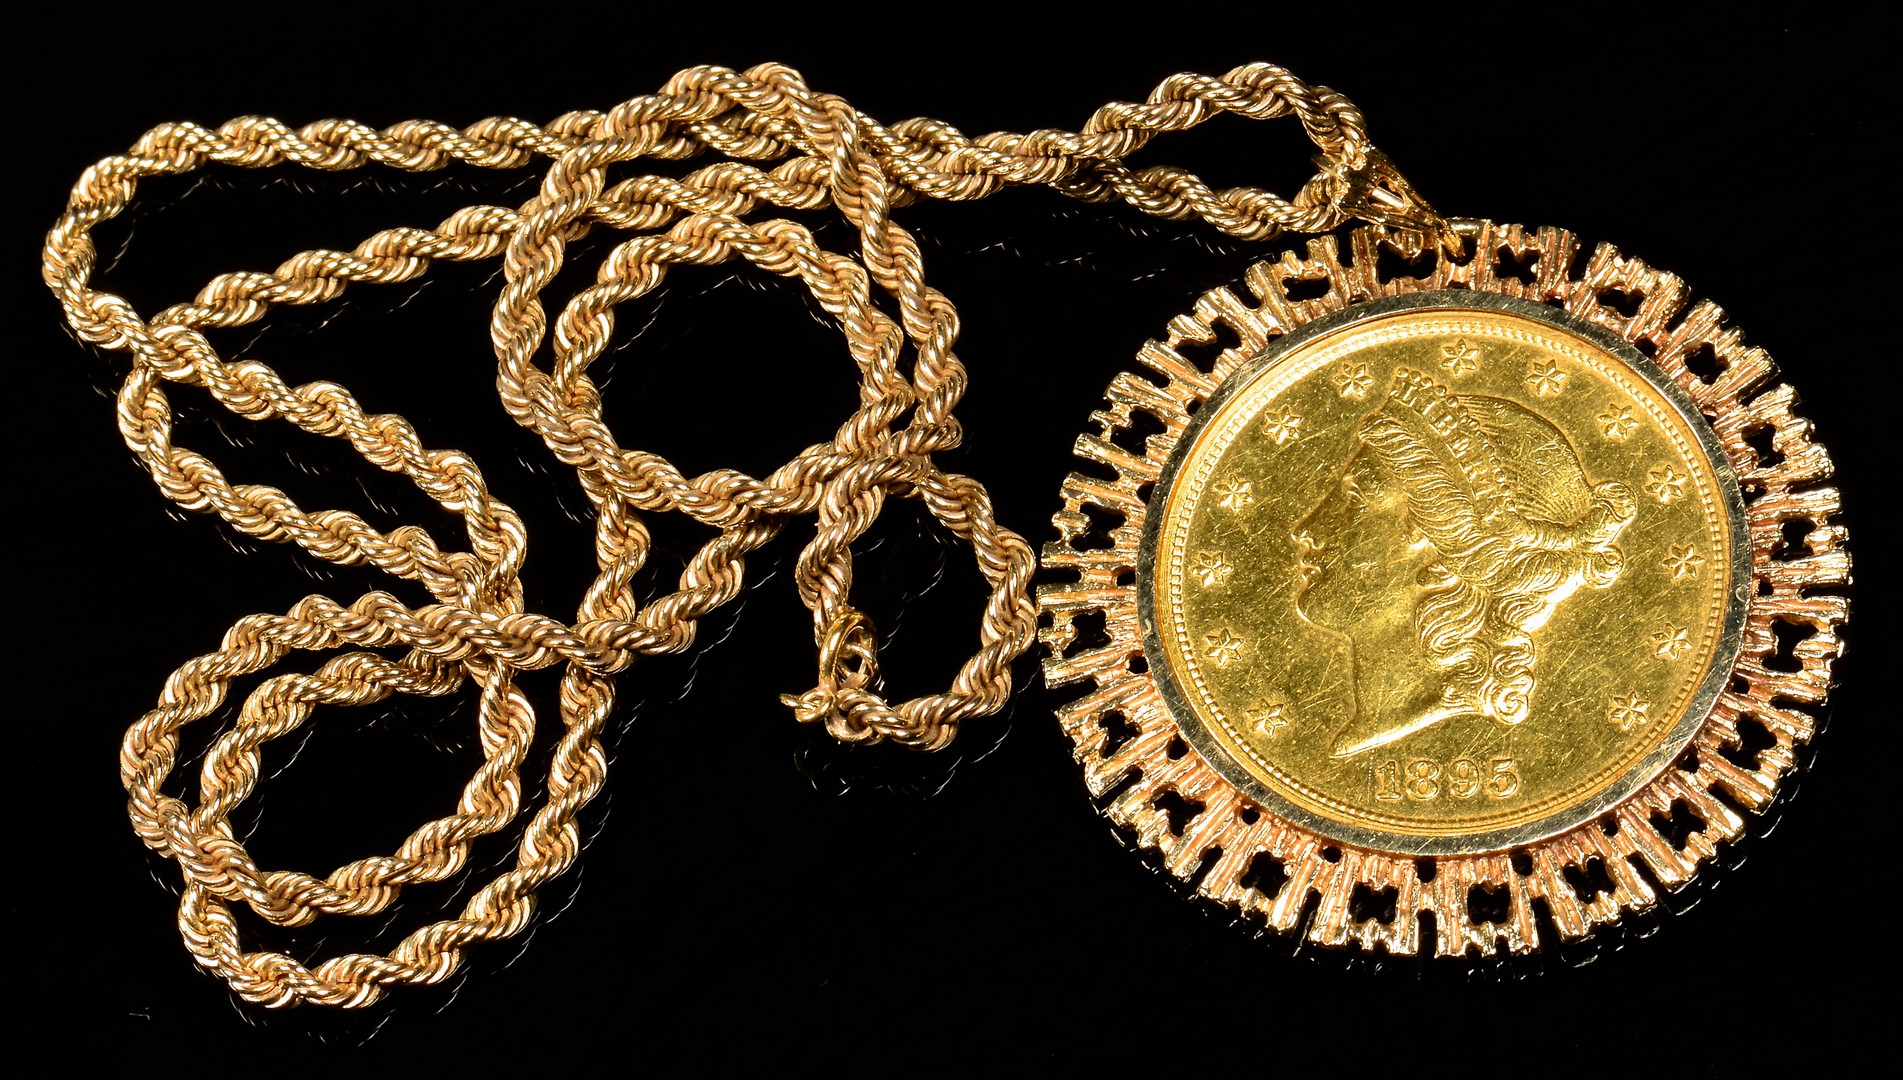 Lot 348: 1895 $20 Coin Pendant Necklace